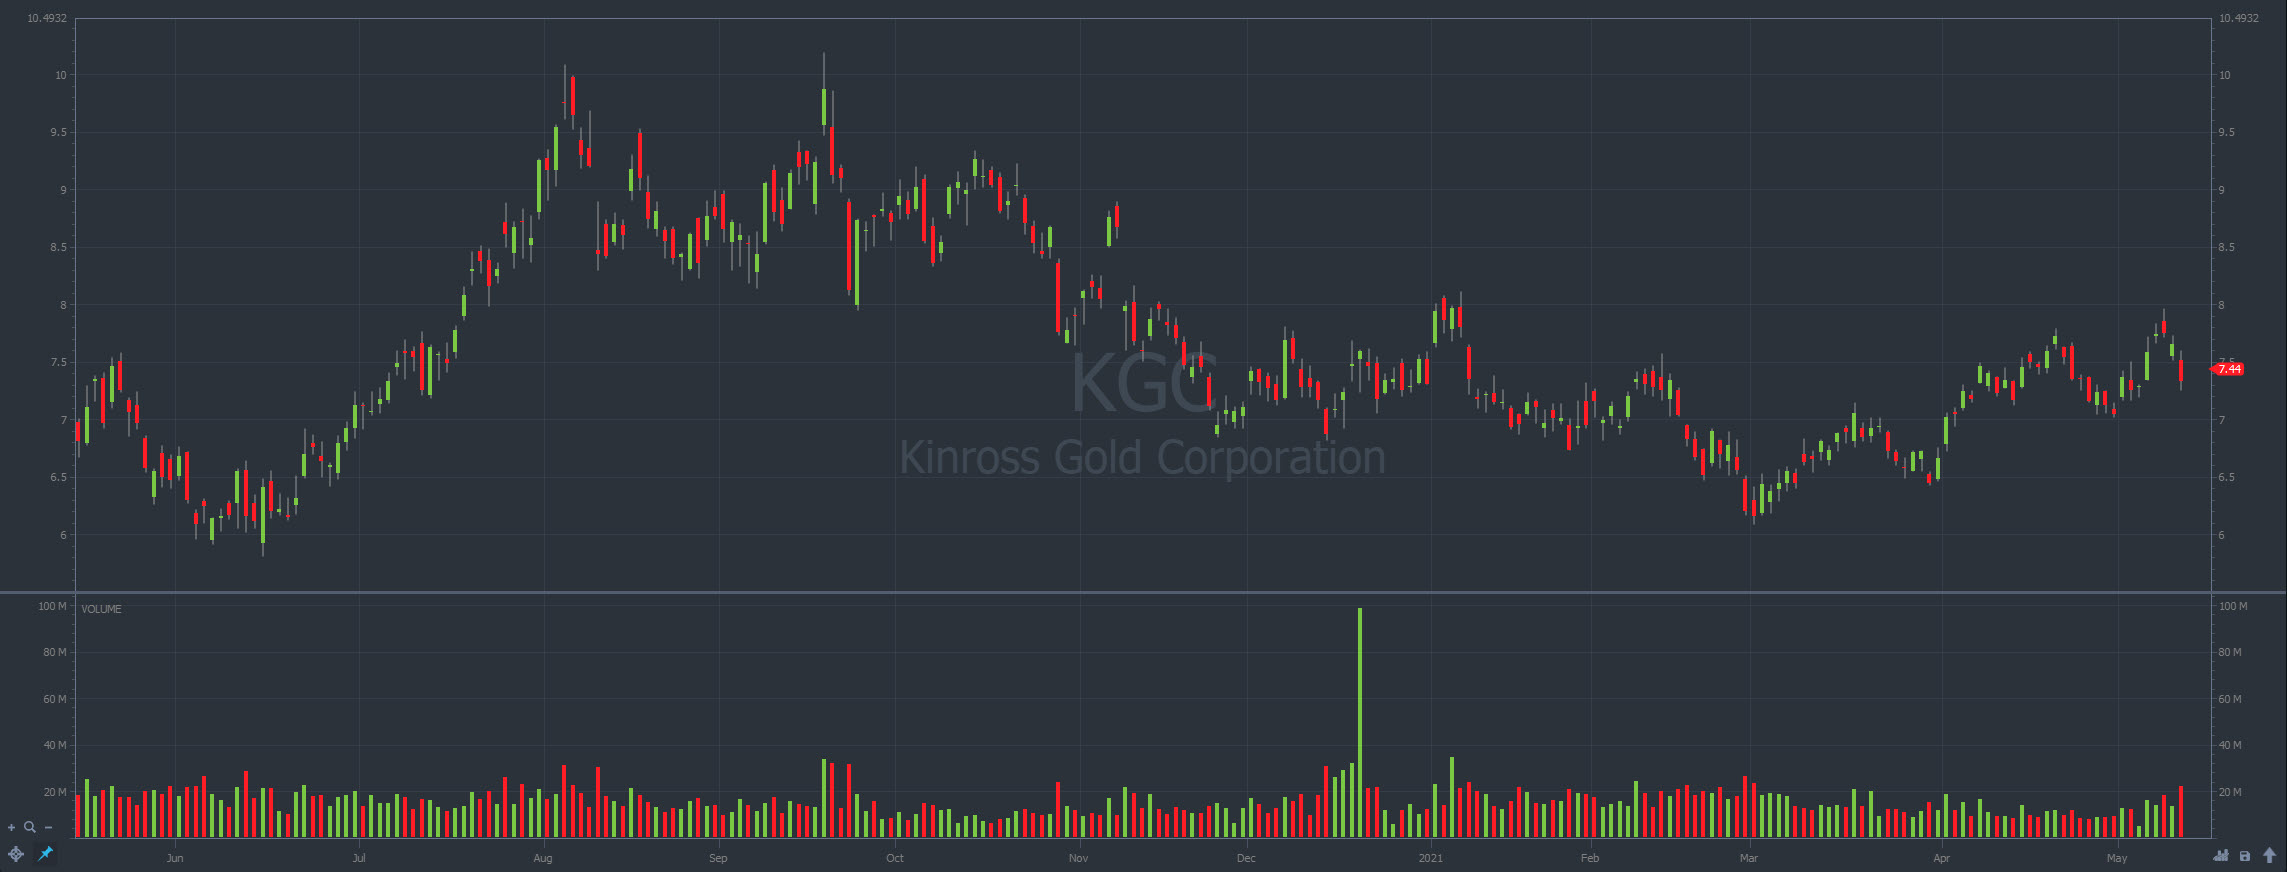 kgc gold & silver stocks